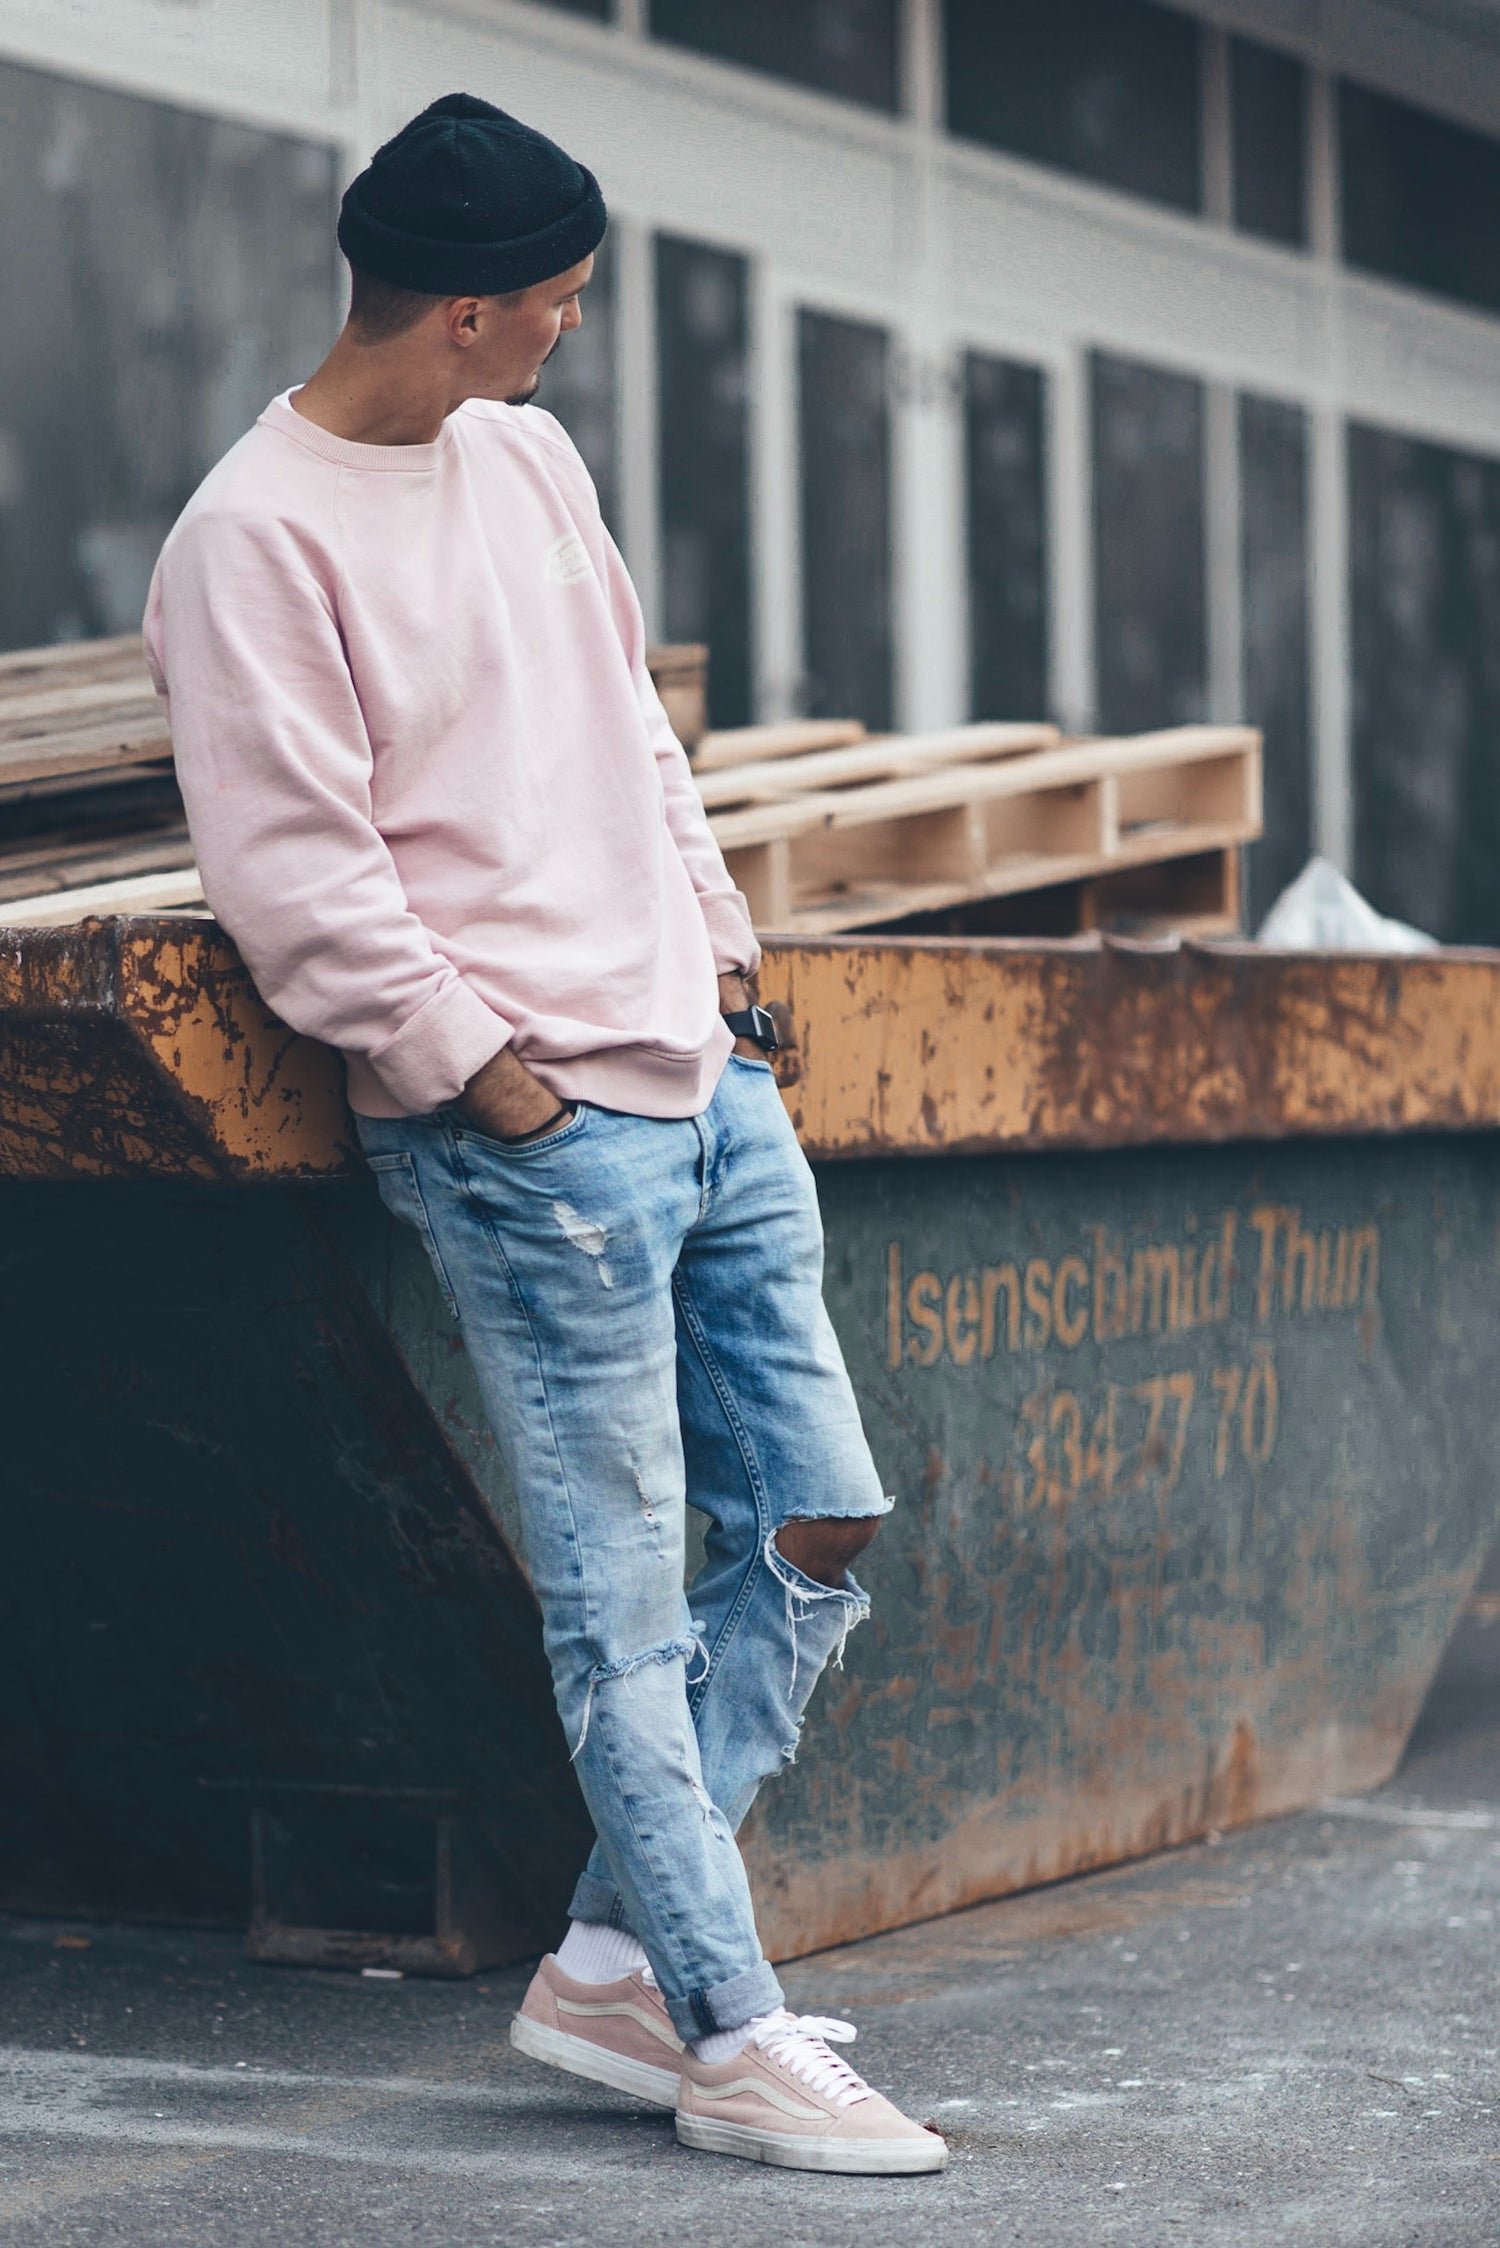 Model wearing a black beanie, pink sweatshirt, and torn jeans.